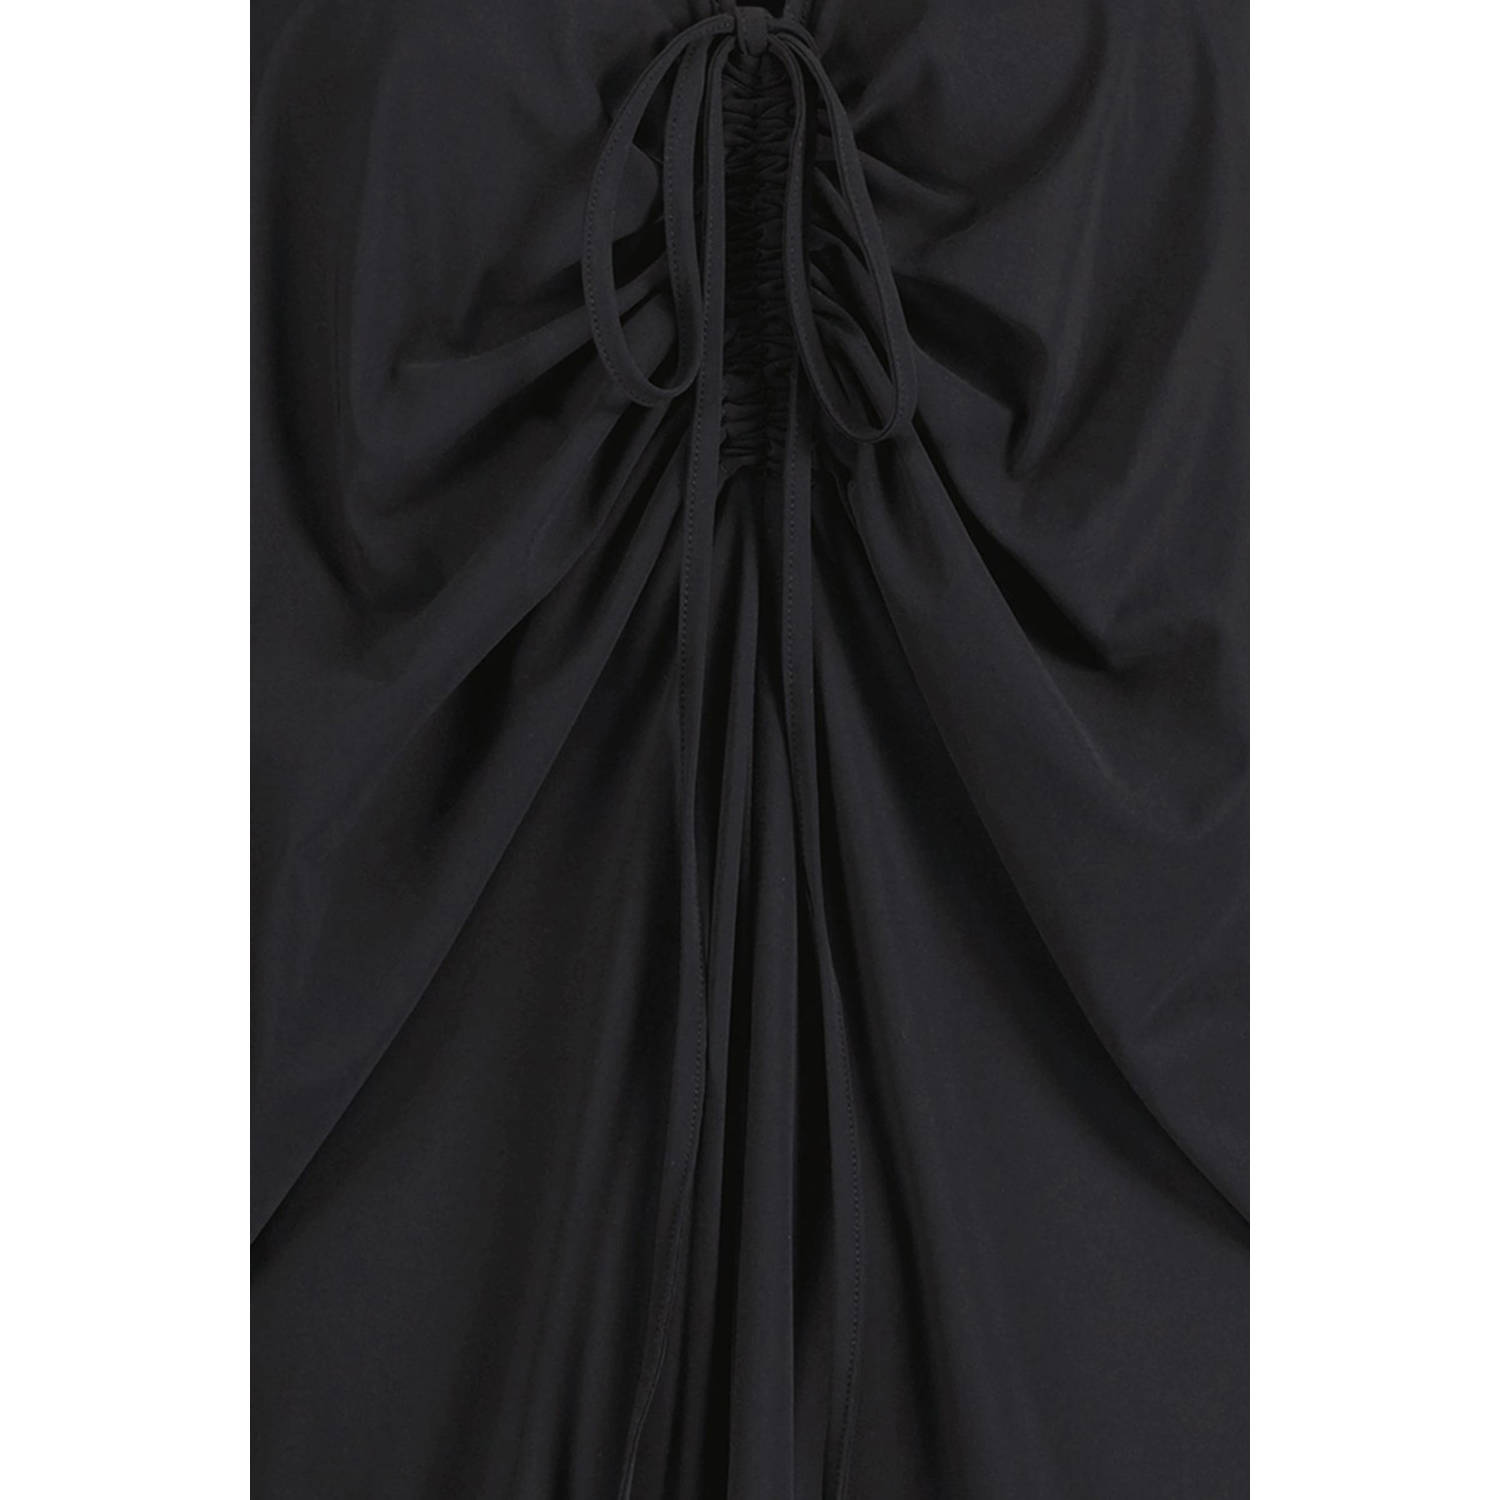 Jane Lushka jurk van travelstof zwart